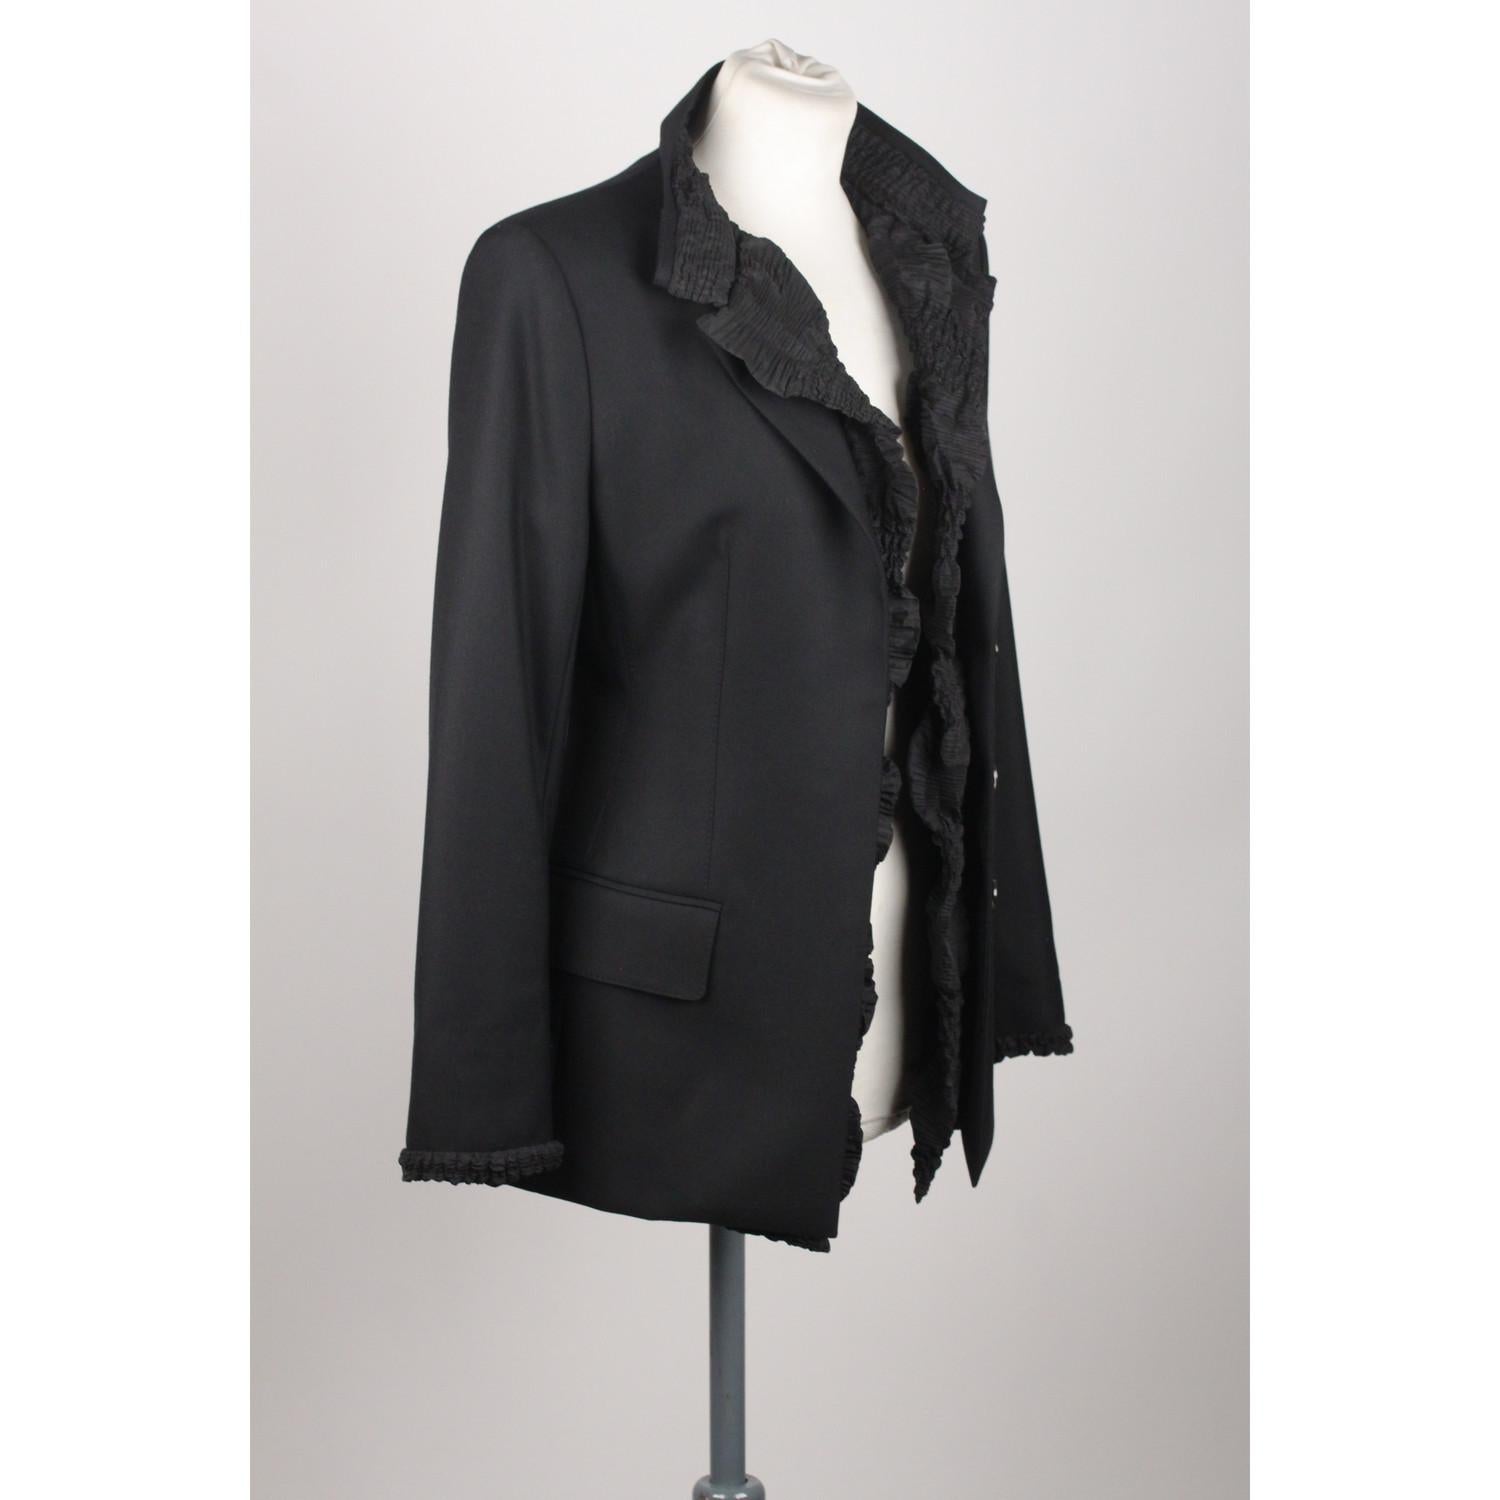 Yves Saint Laurent Black Wool Pant Suit with Ruffles Size 36 2